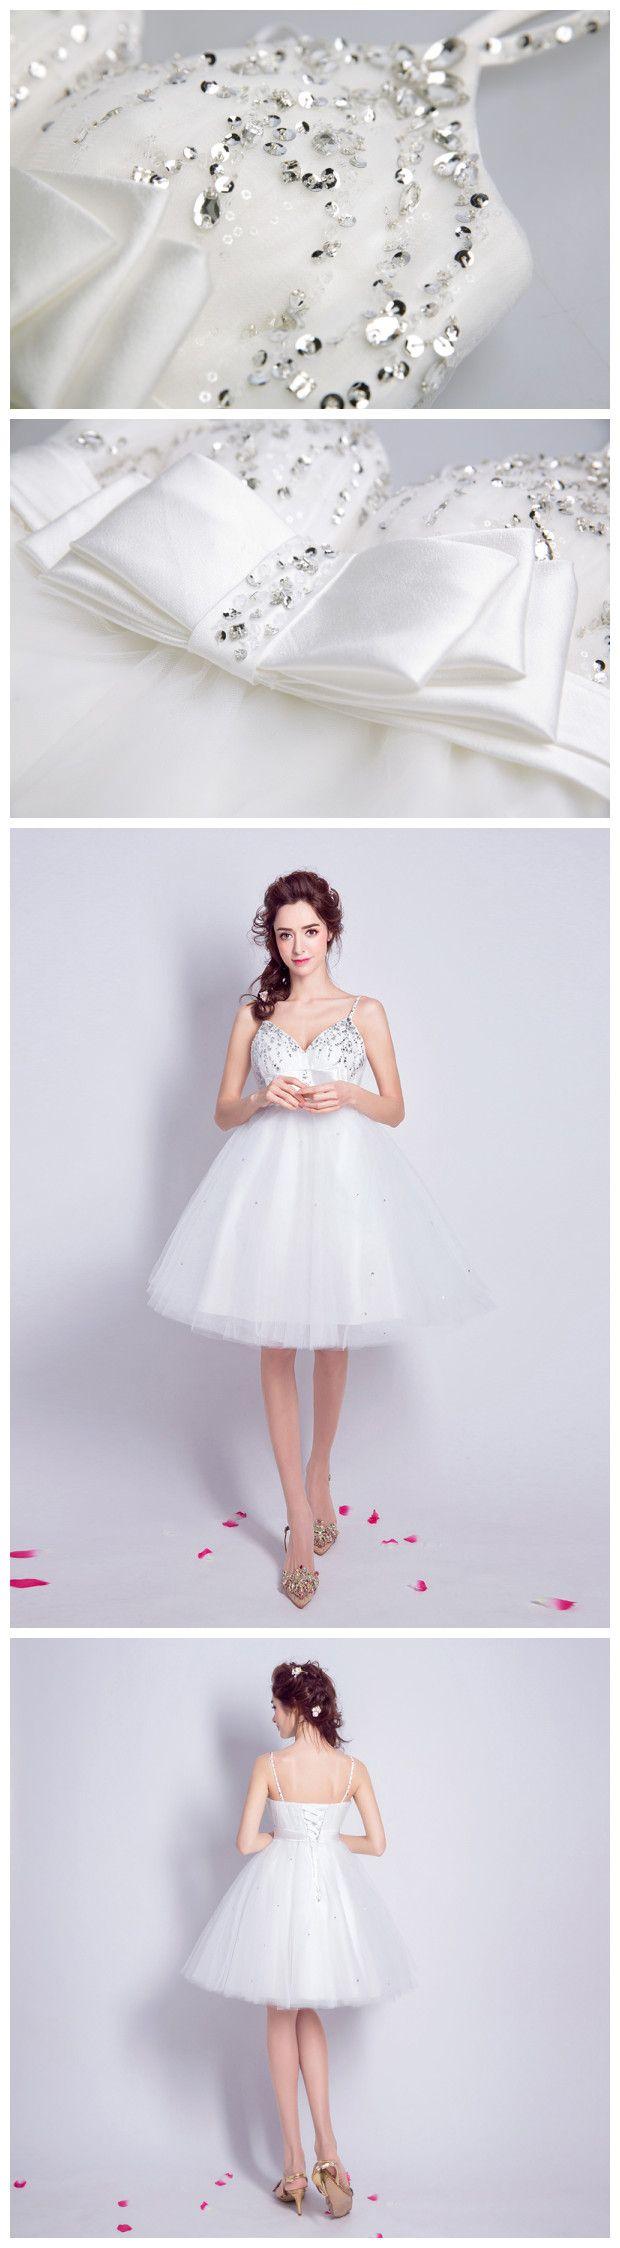 زفاف - Short Prom Dresses